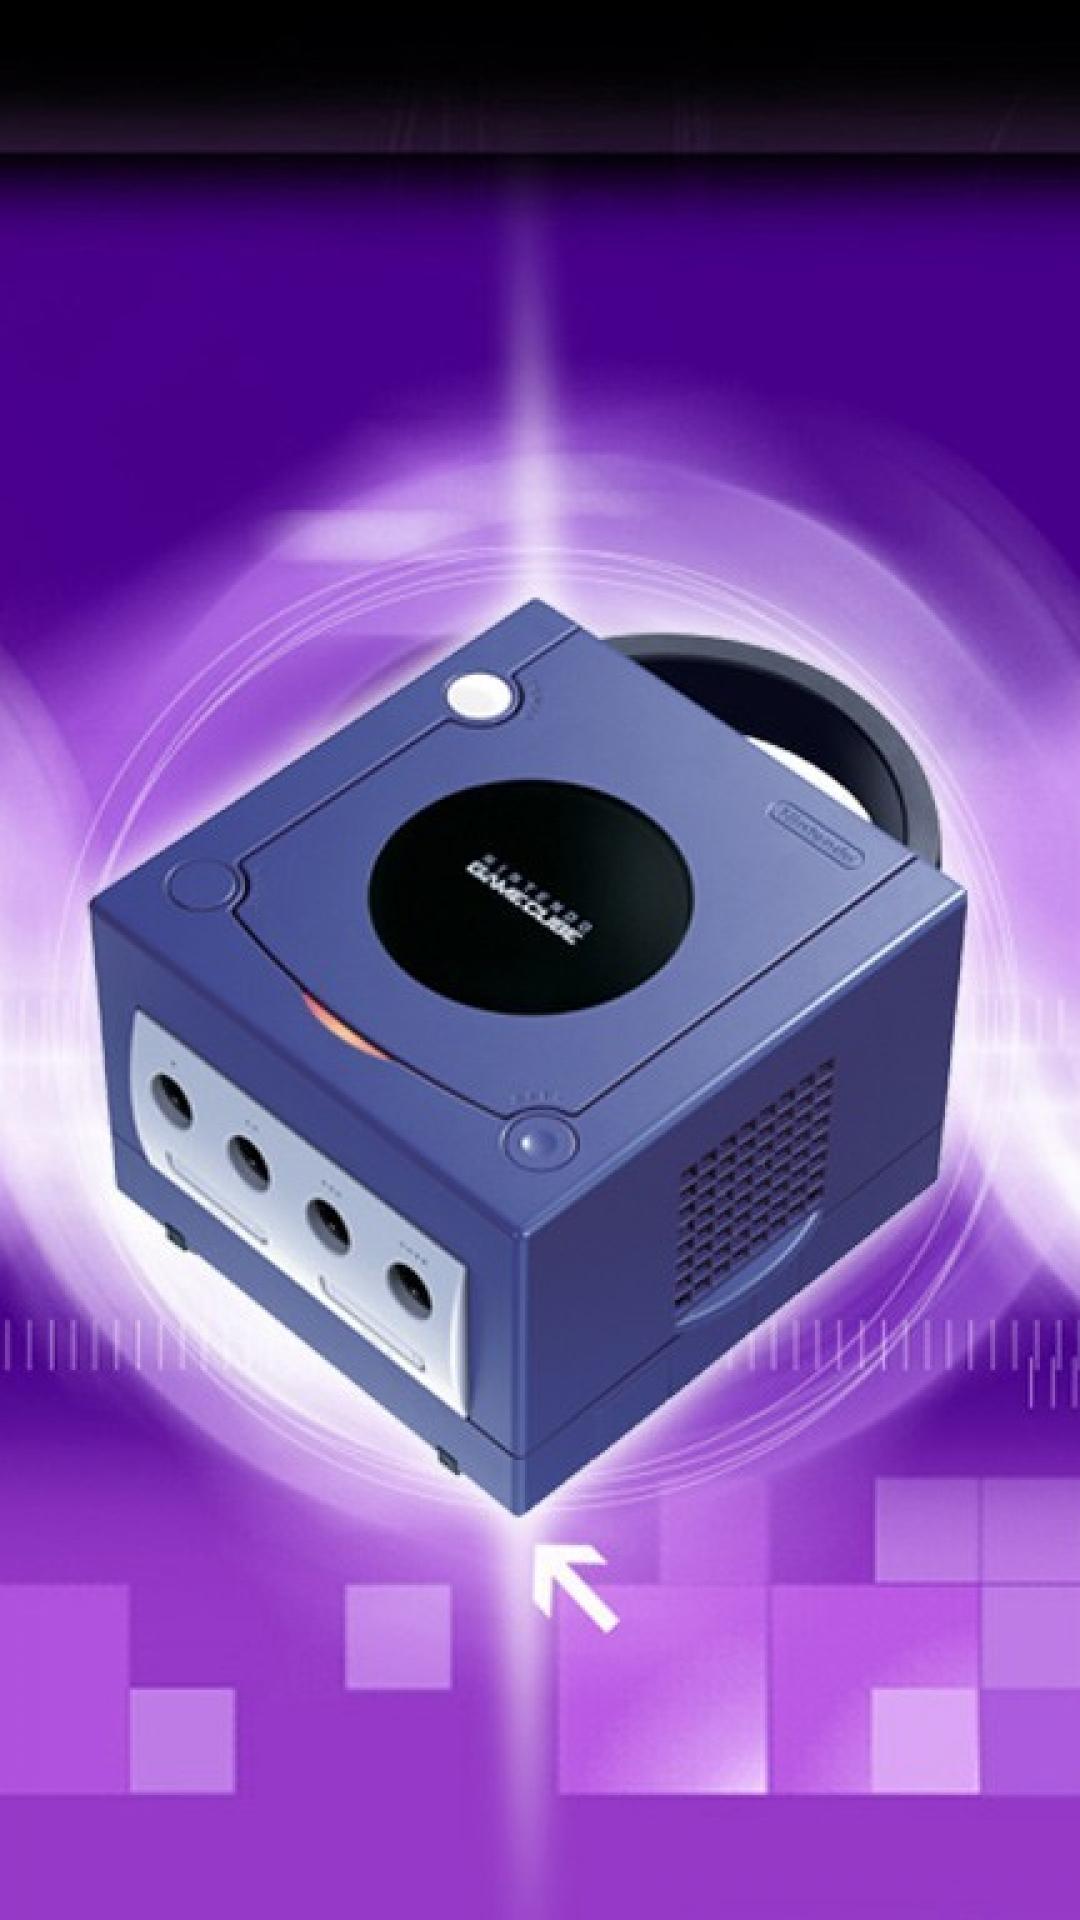 gamecube-desktop-icon-247177-free-icons-library